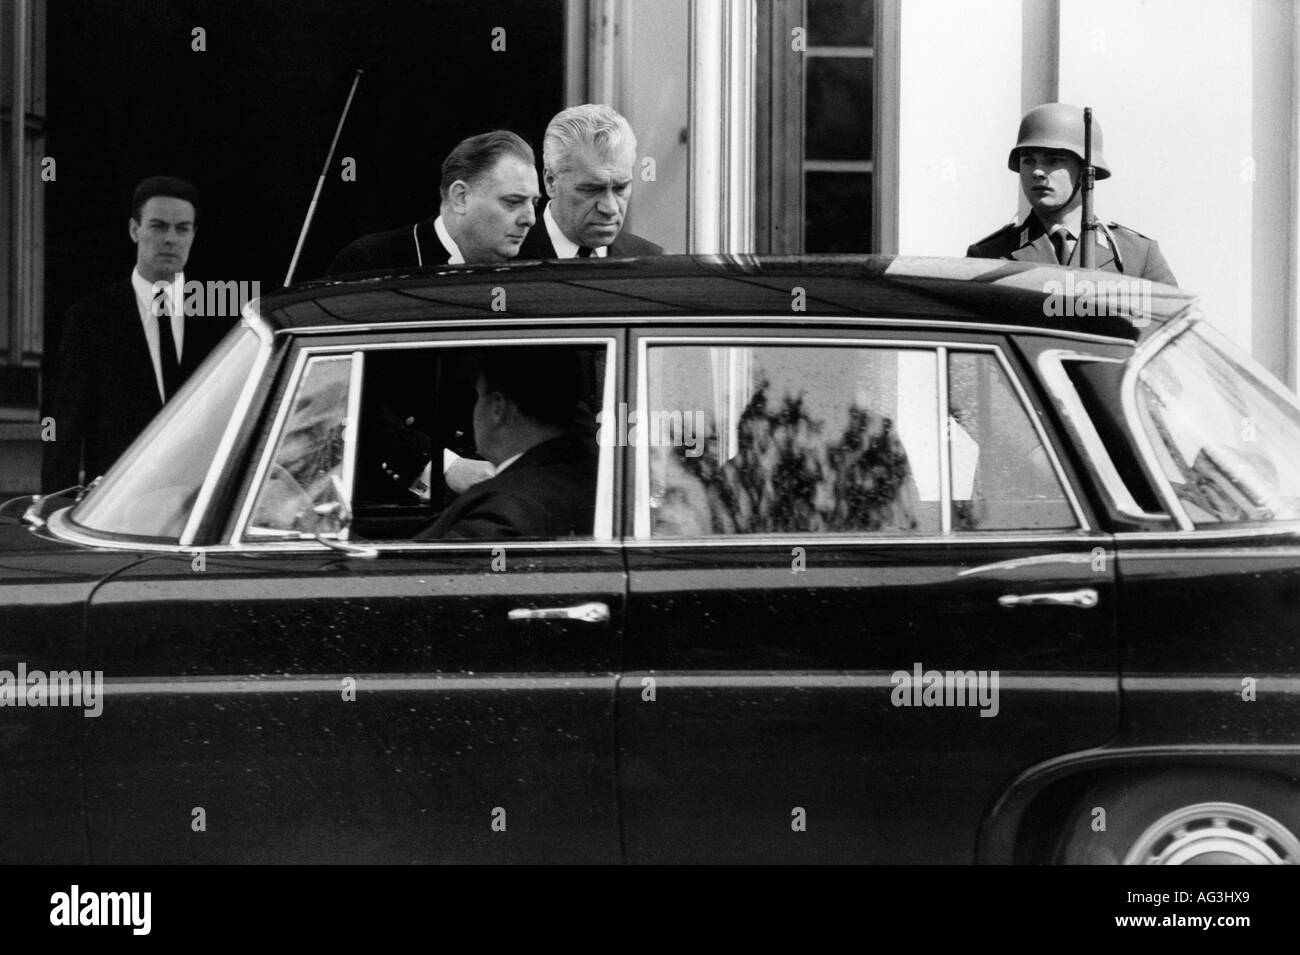 Zarapkin, Semjon Konstantinowitsch, * 4.6.1906, Soviet diplomat, 1966 - 1971 ambassador of the Soviet Union in Germany, condolence visit regarding the dead of Konrad Adenauer, 1967, Stock Photo